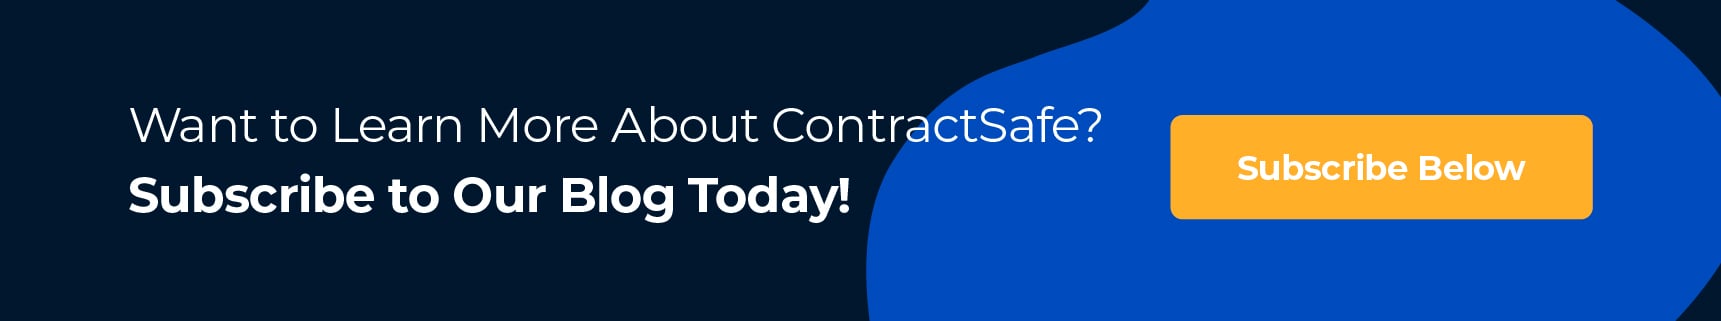 ContractSafe-Blog-6-Best-Practices-for-Effective-Contract-Management-IMAGES-CTA-1